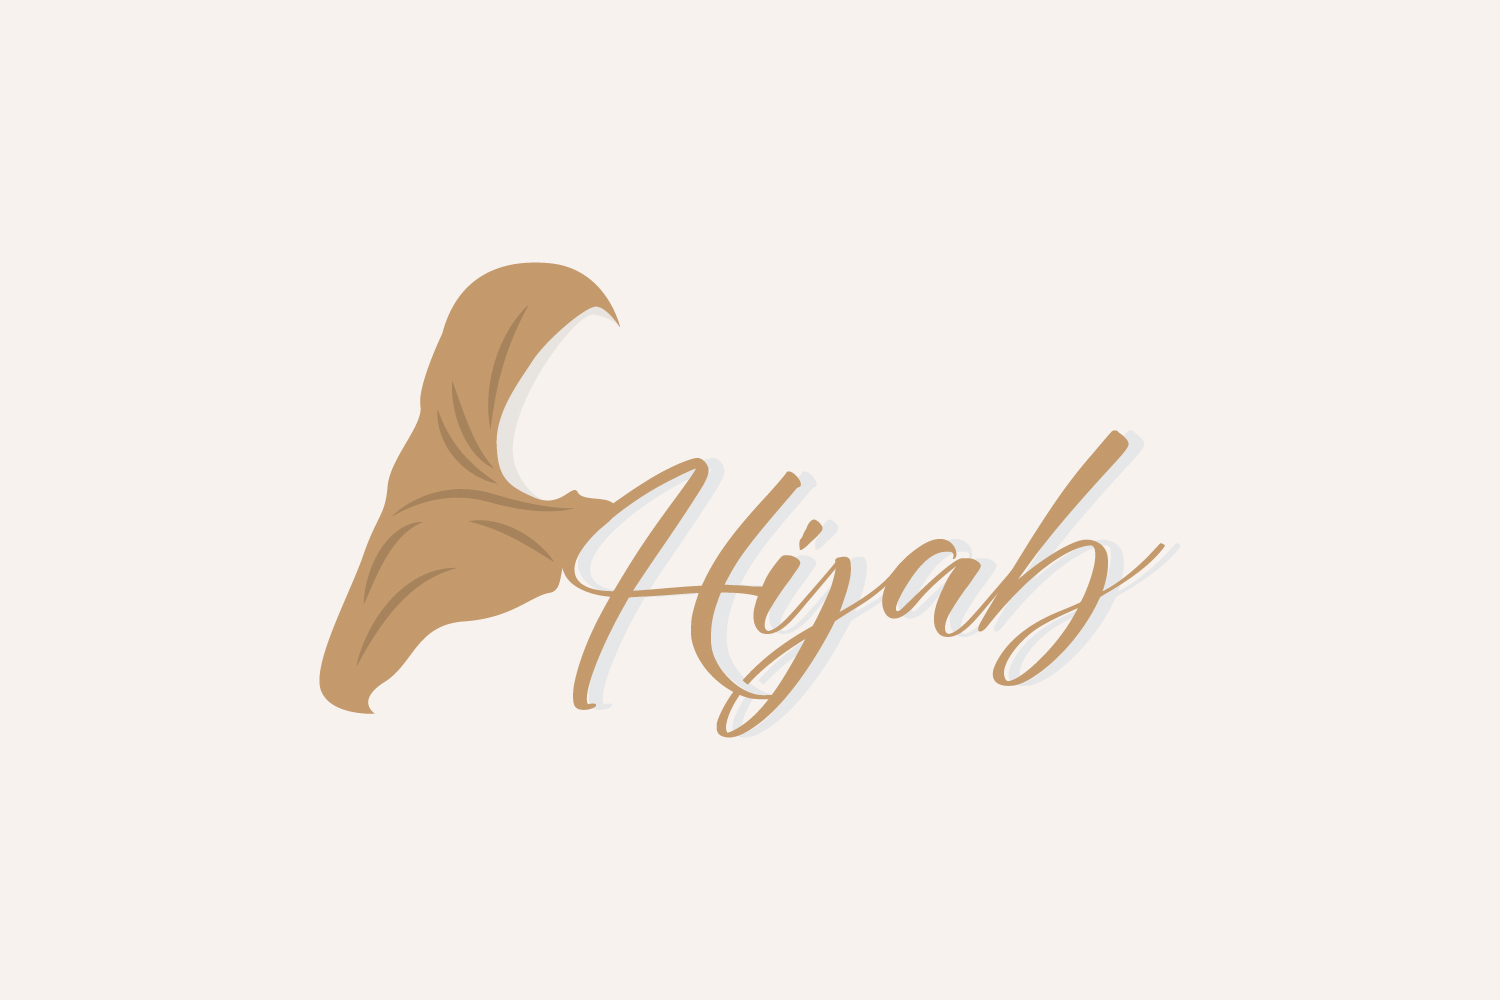 HIjab Logo Fashion Product Vector Version9